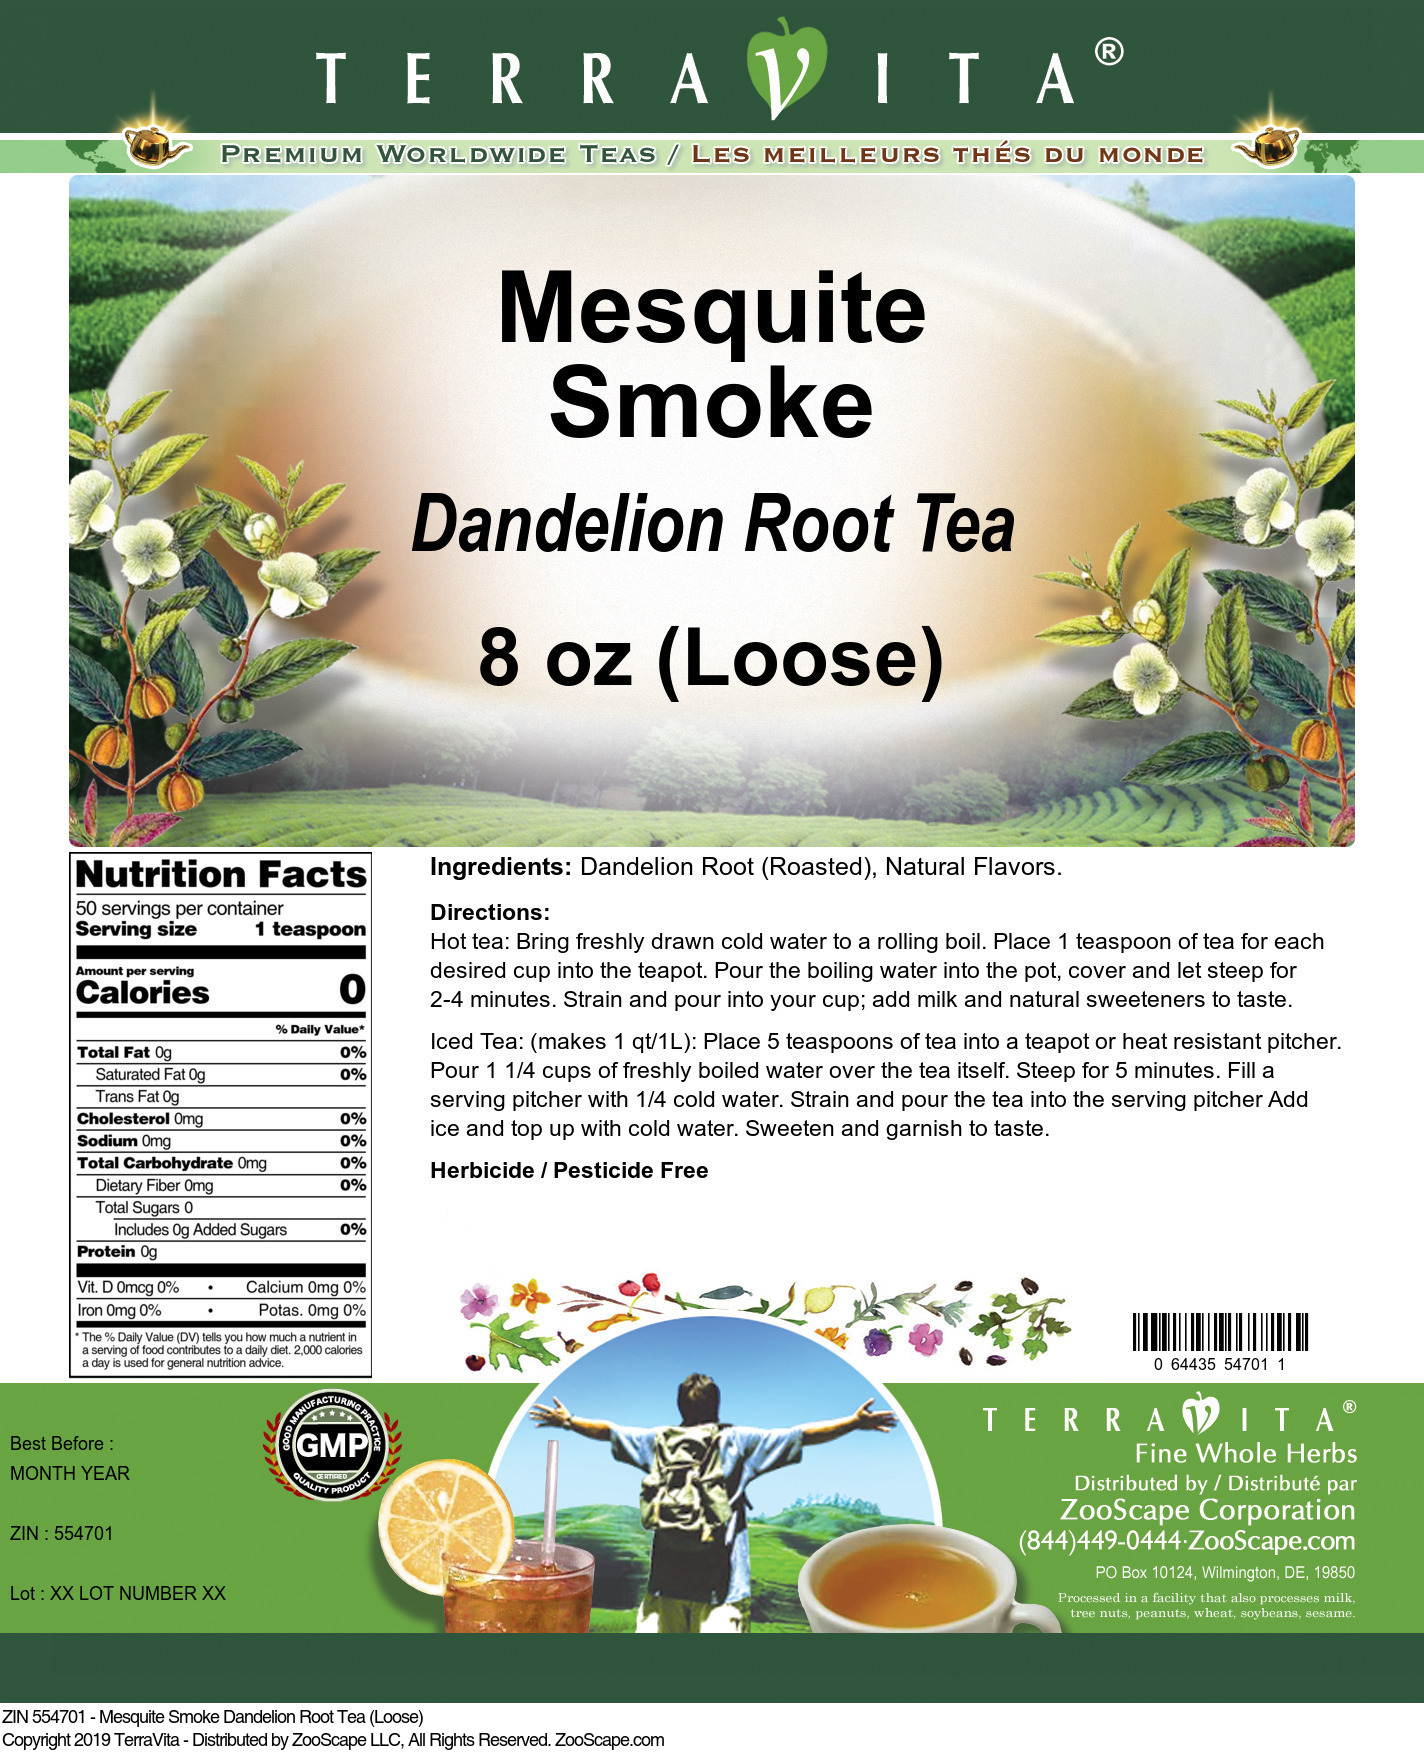 Mesquite Smoke Dandelion Root Tea (Loose) - Label